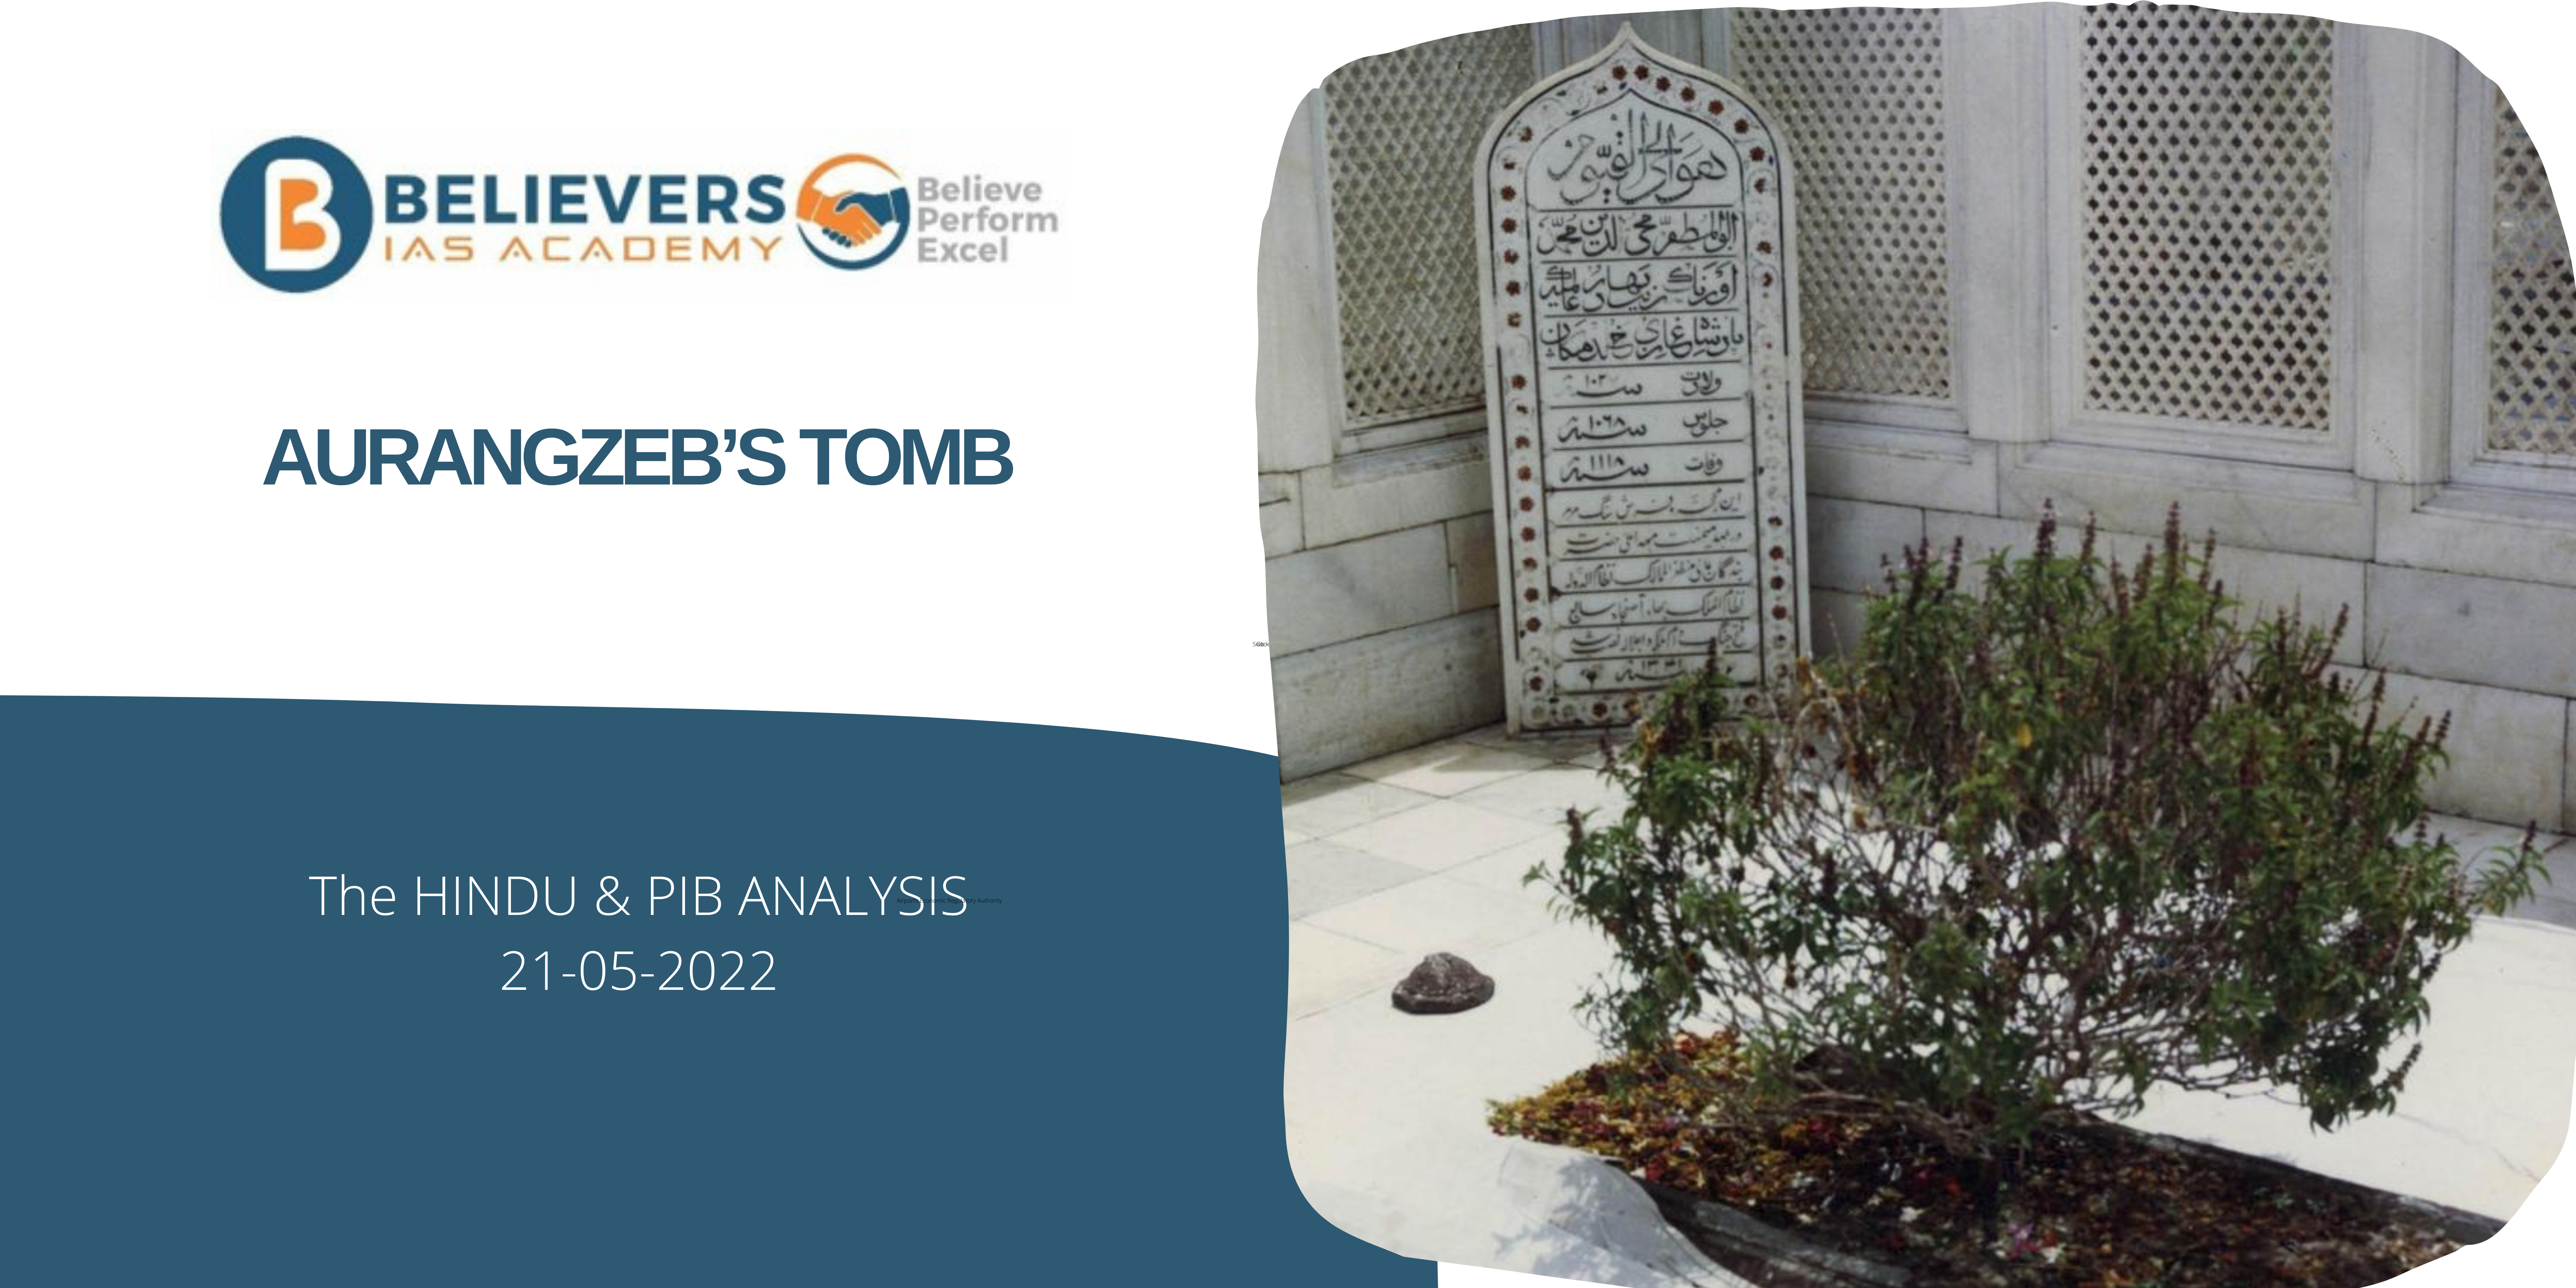 IAS Current affairs - Aurangzeb’s Tomb: Detailed Biography